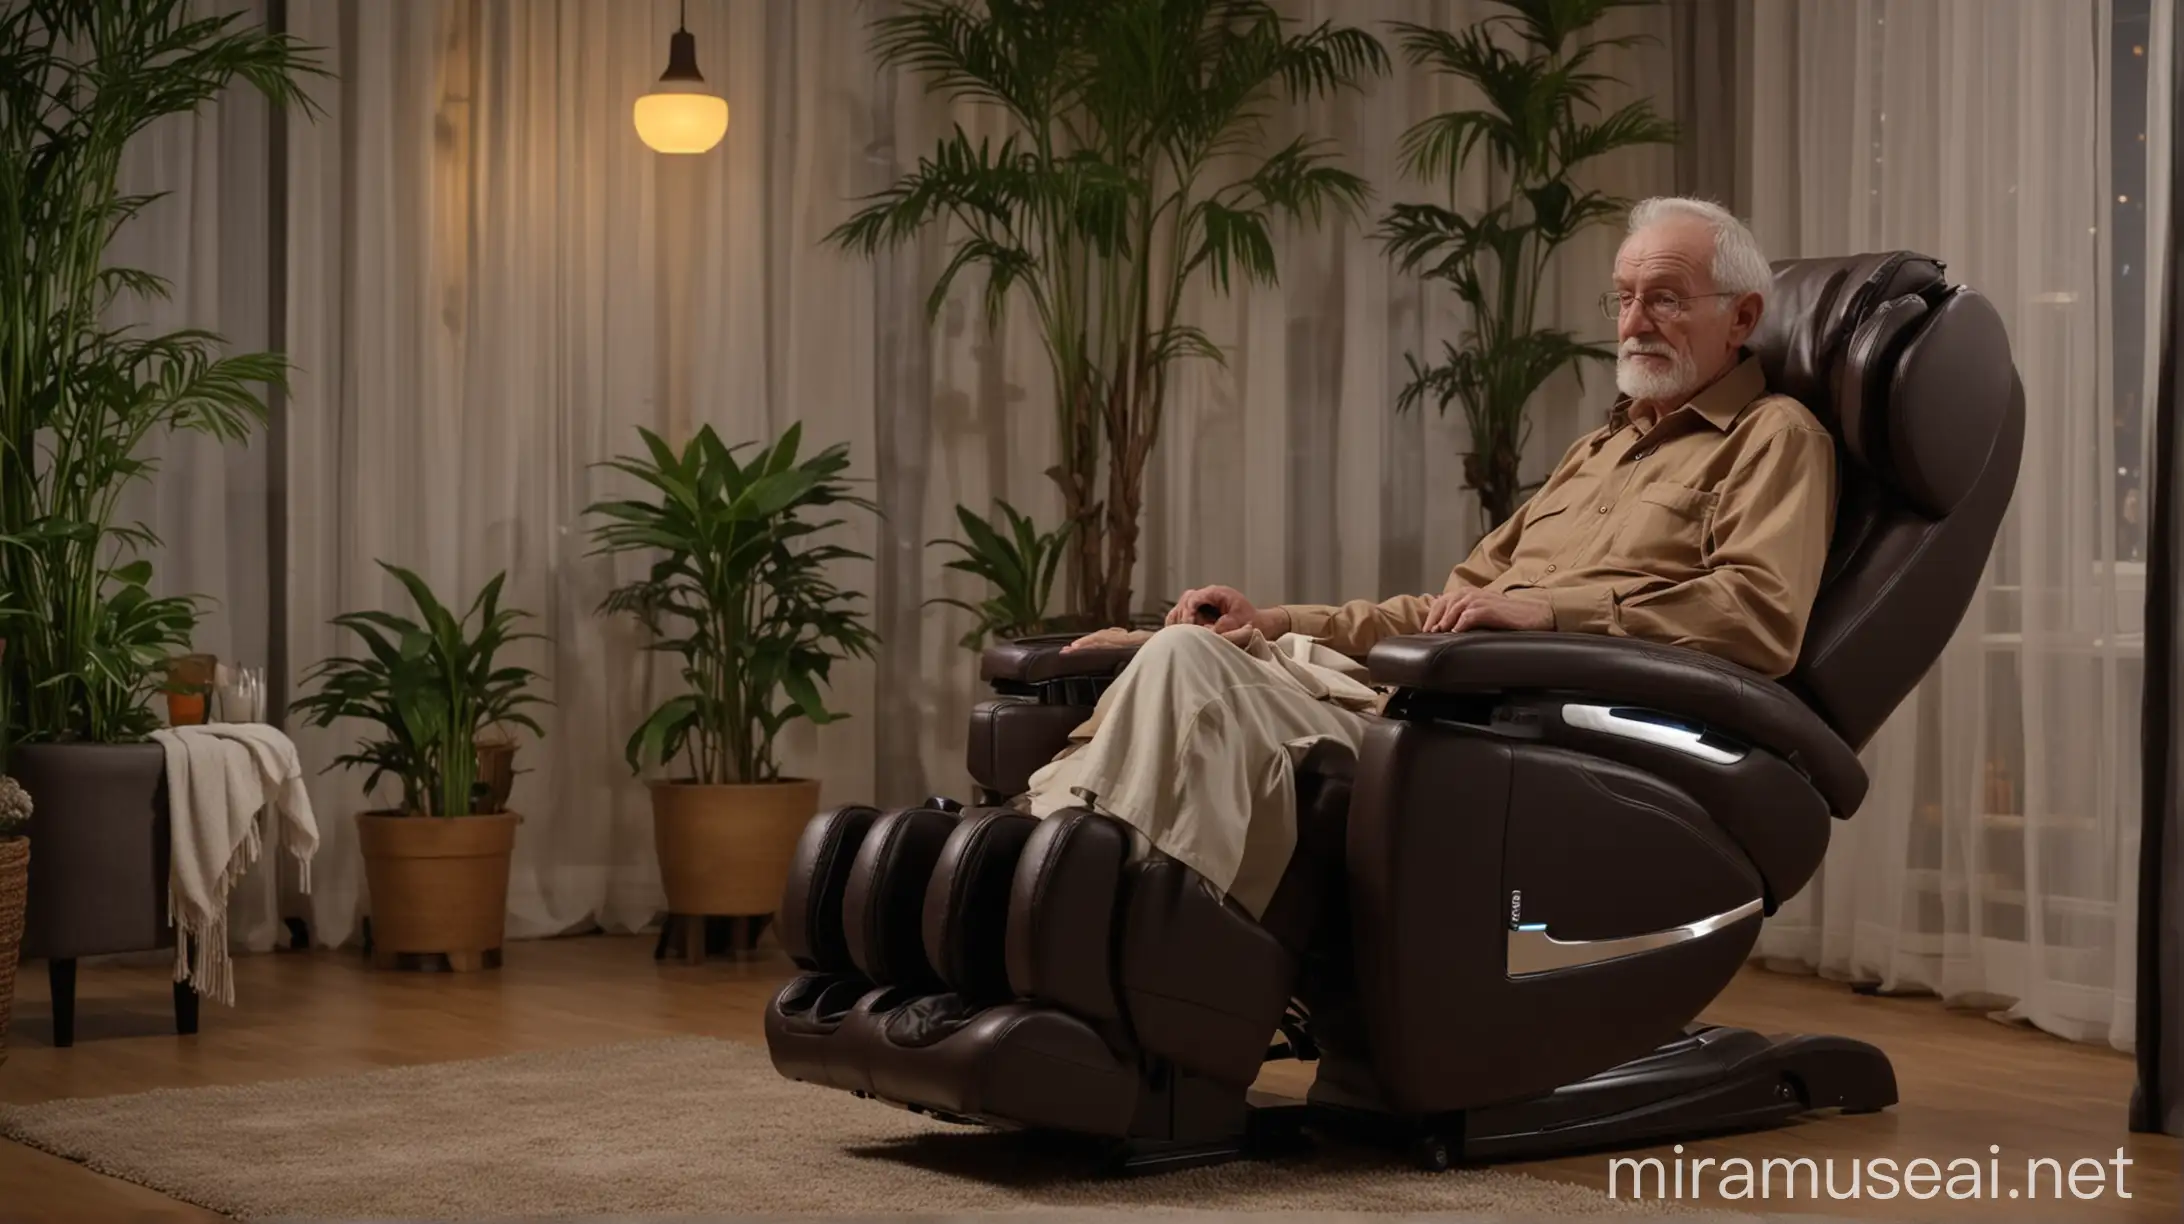 Elderly Gentleman Relaxing in HighEnd Electric Massage Chair at Night